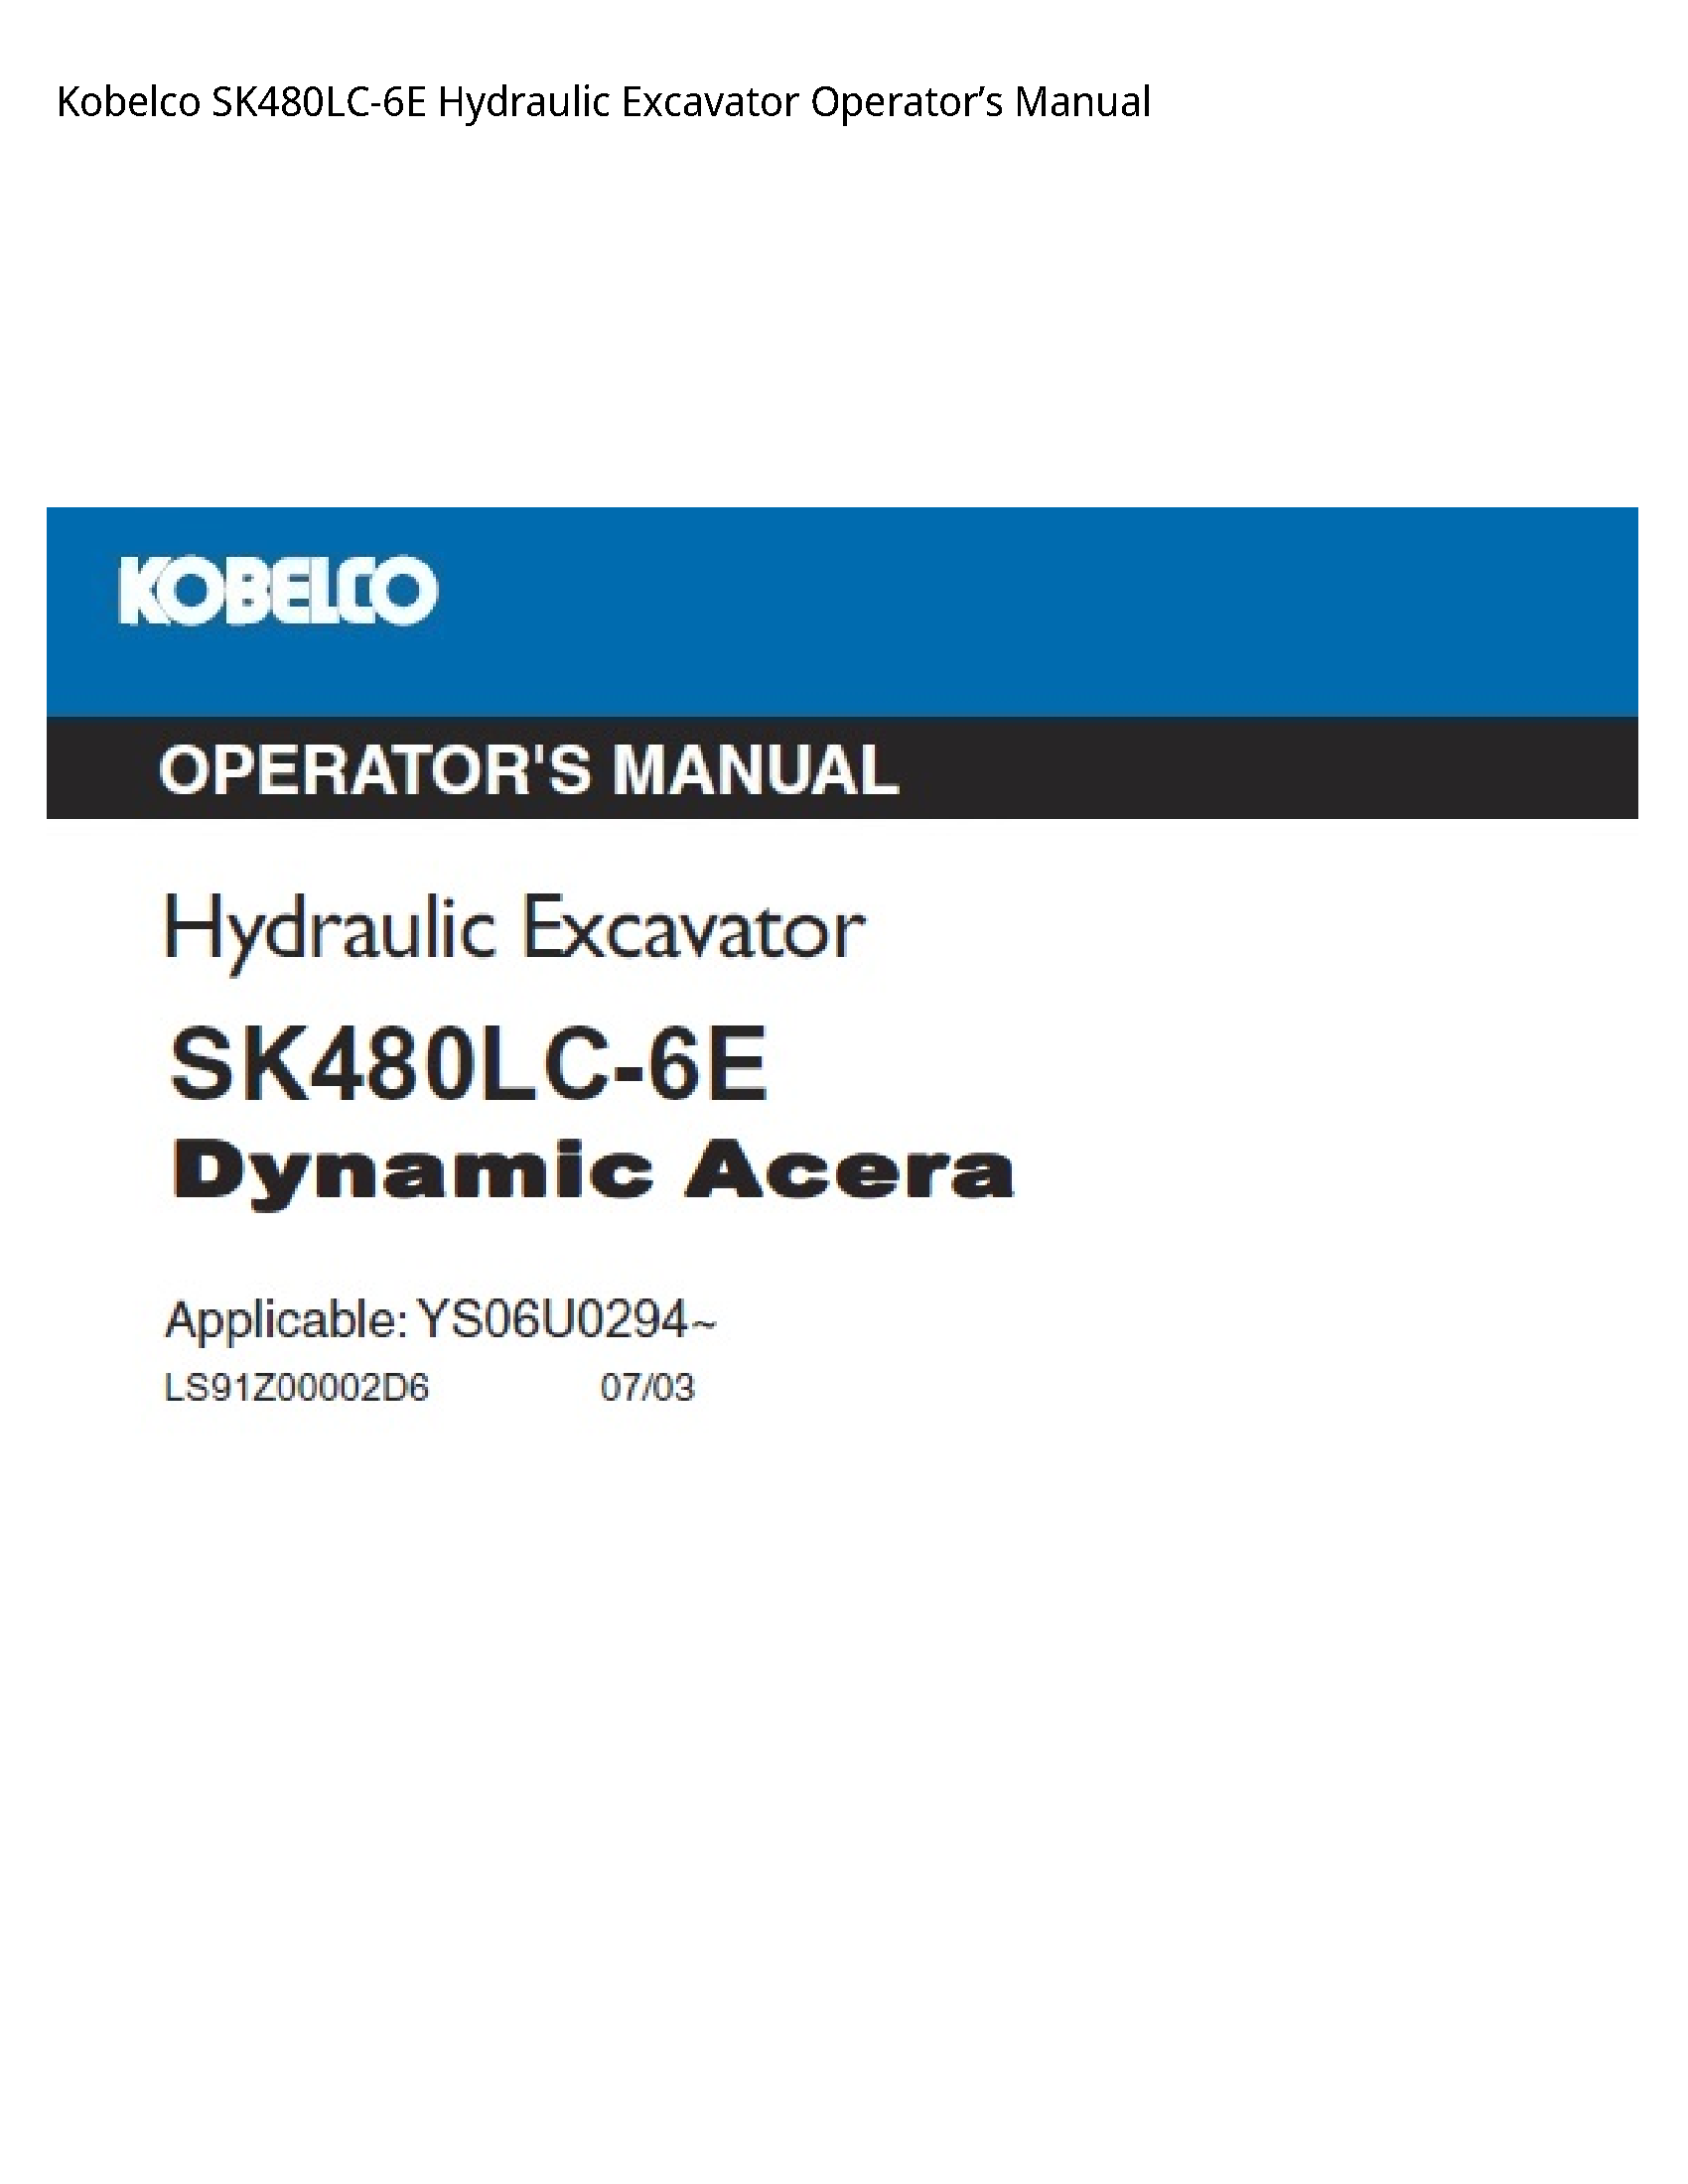 Kobelco SK480LC-6E Hydraulic Excavator Operator’s manual